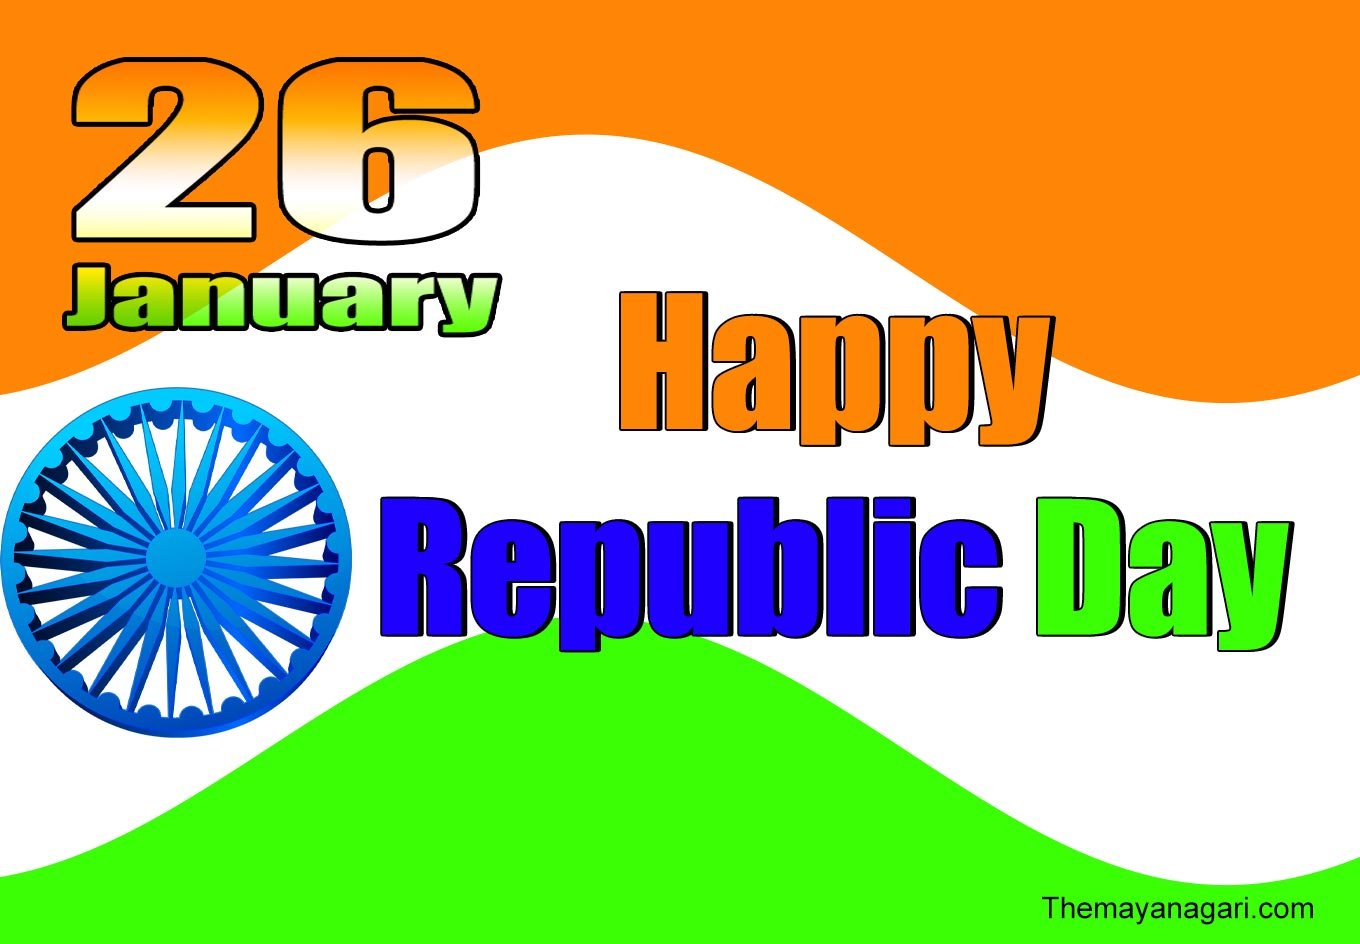 Happy Republic Day 26 January Free Download - The Mayanagari